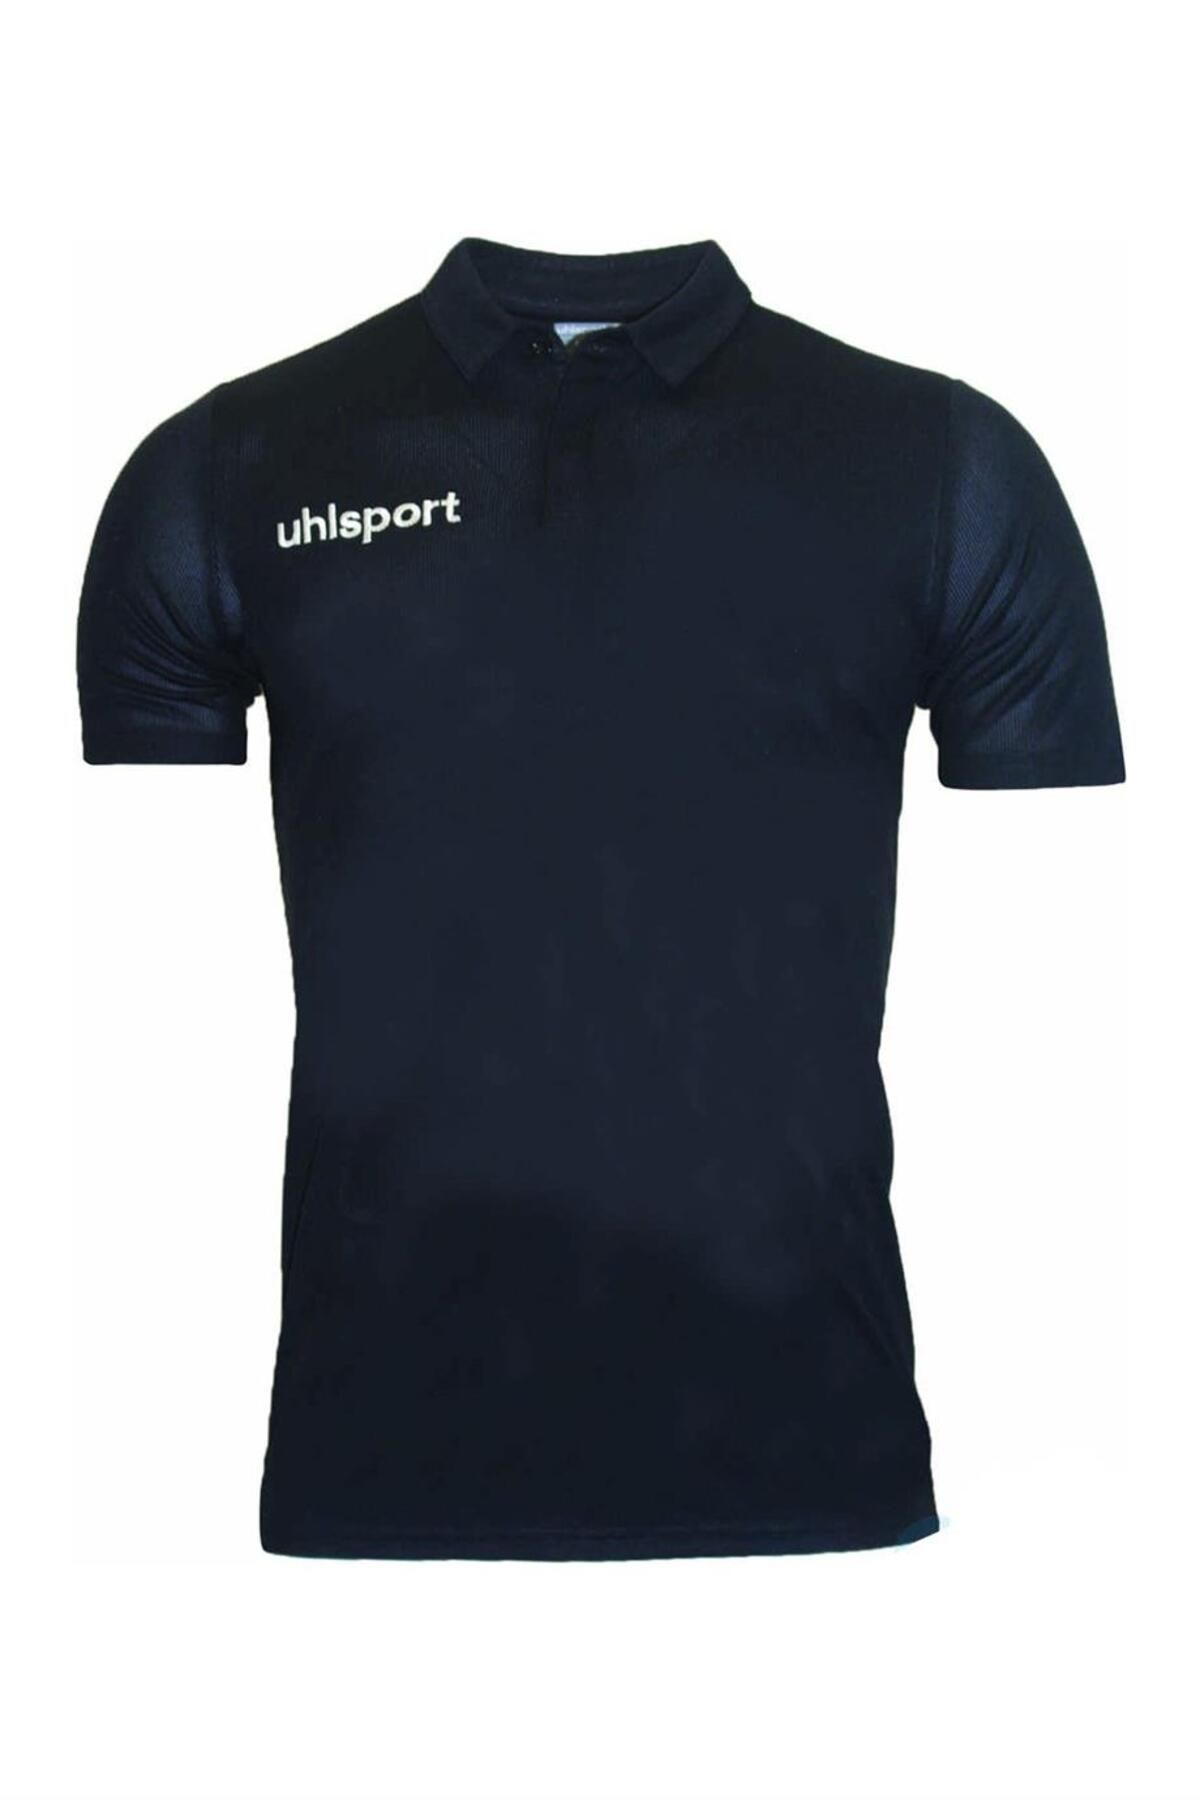 uhlsport Polo Yaka t -shirt Essential 1002210